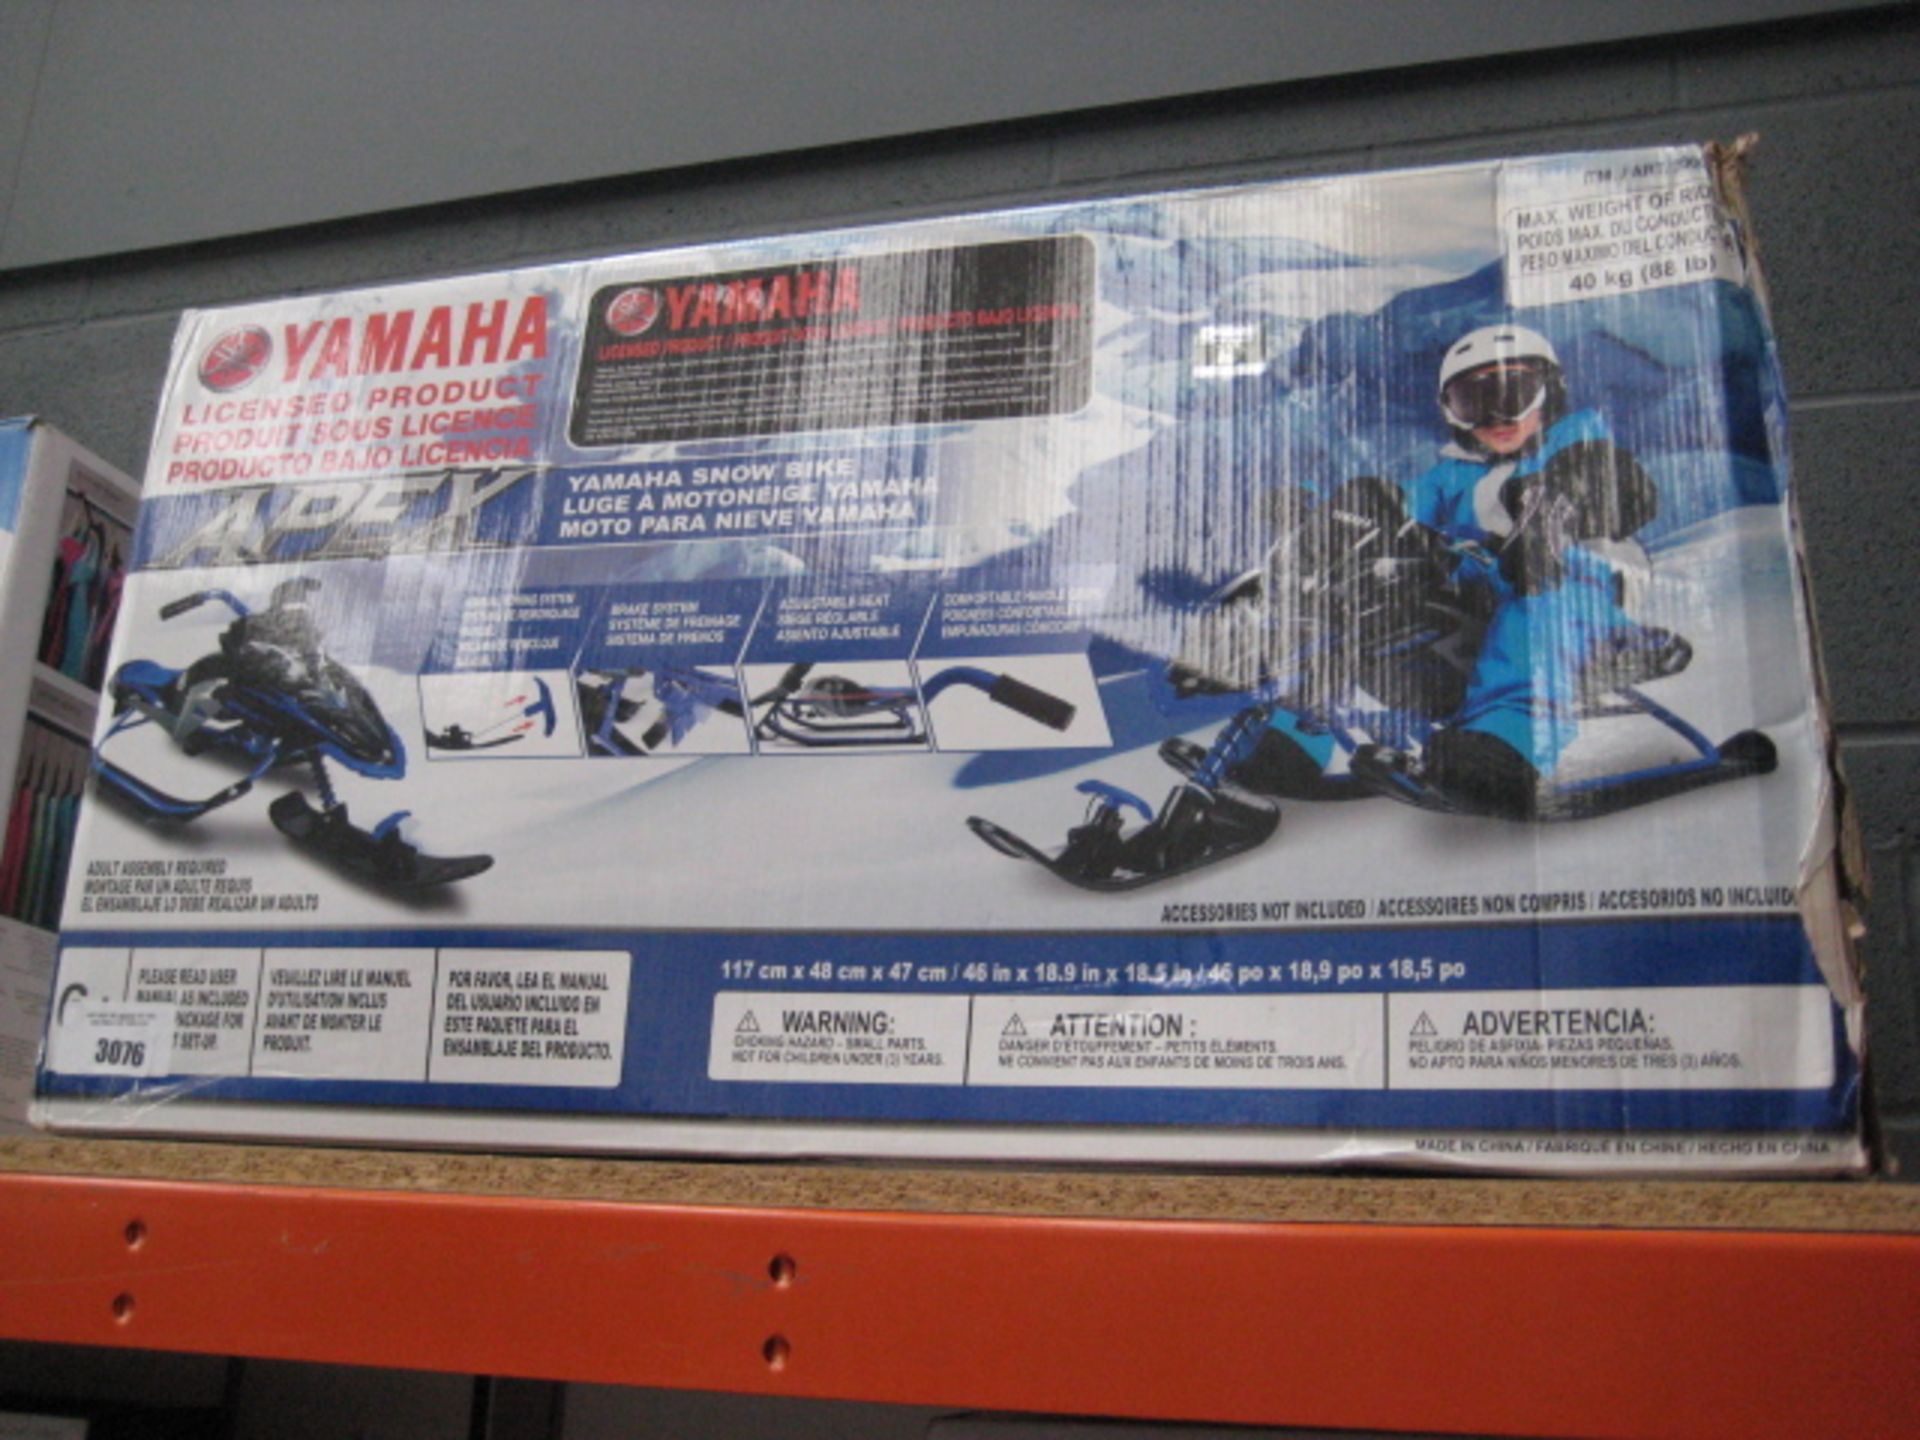 Boxed Yamaha snow bike